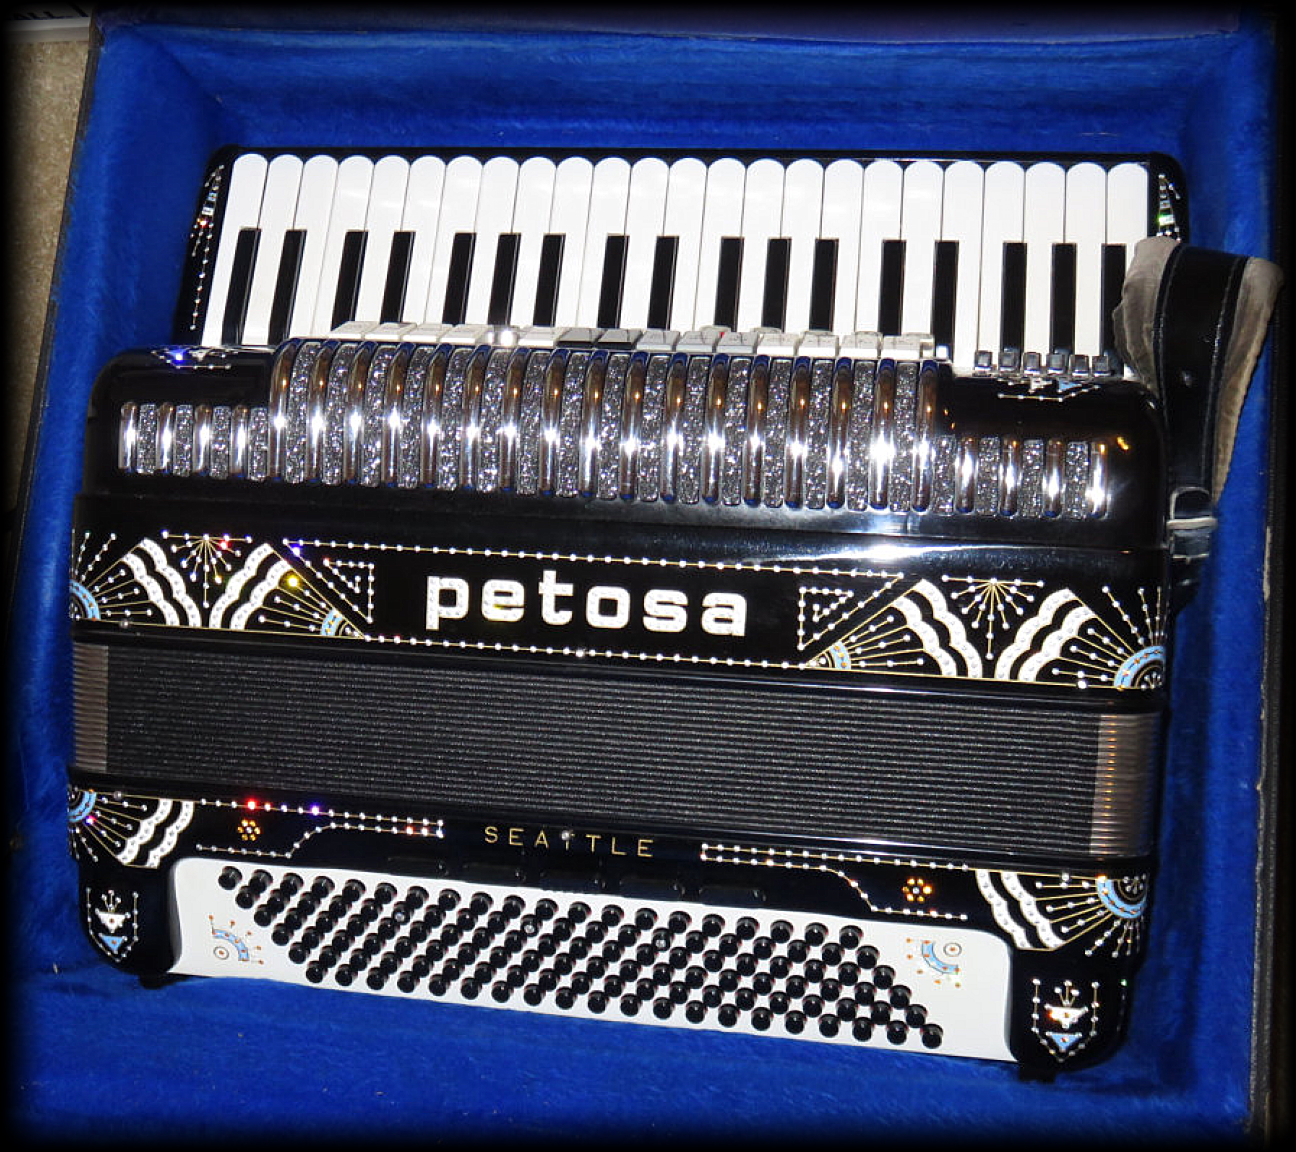 Petosa organ-accordion, 1978